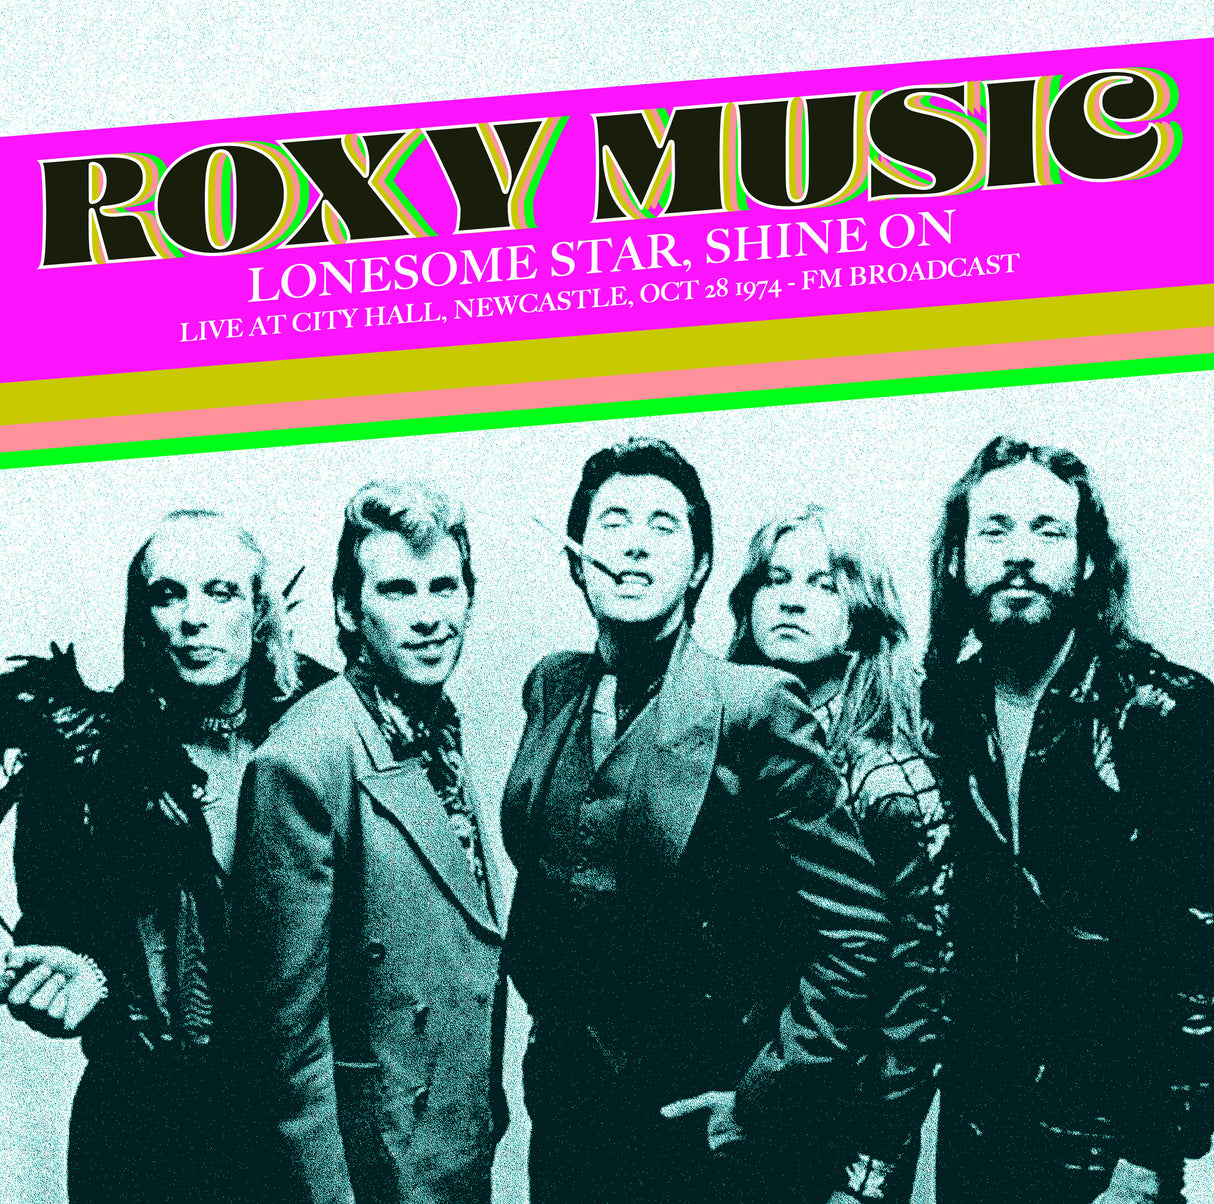 Roxy Music - Lonesome Star, Shine On Live at City Hall [Vinyl]